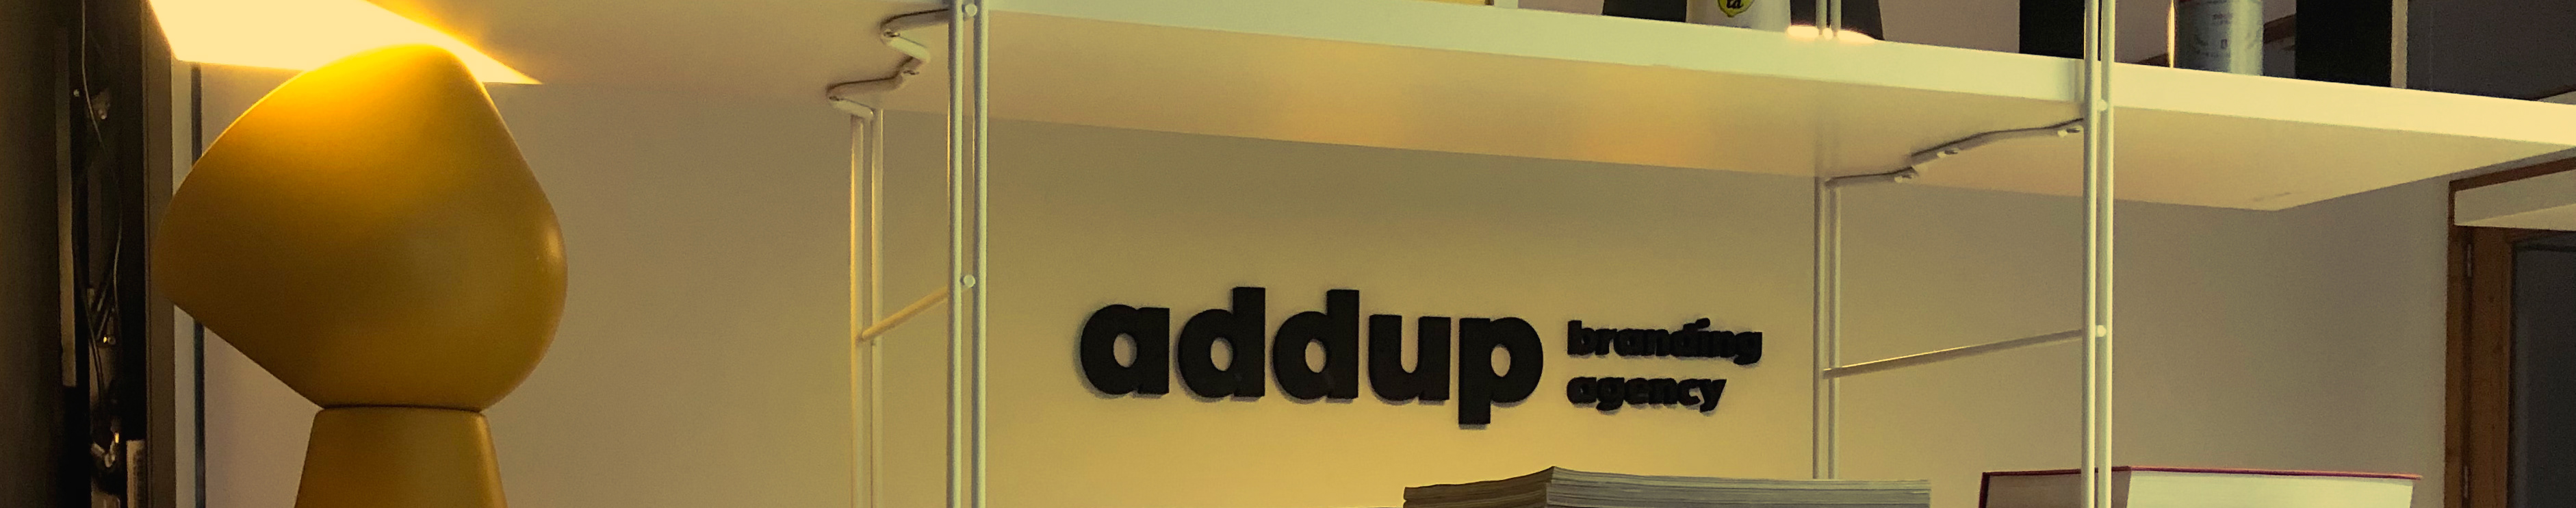 addup ⠀'s profile banner